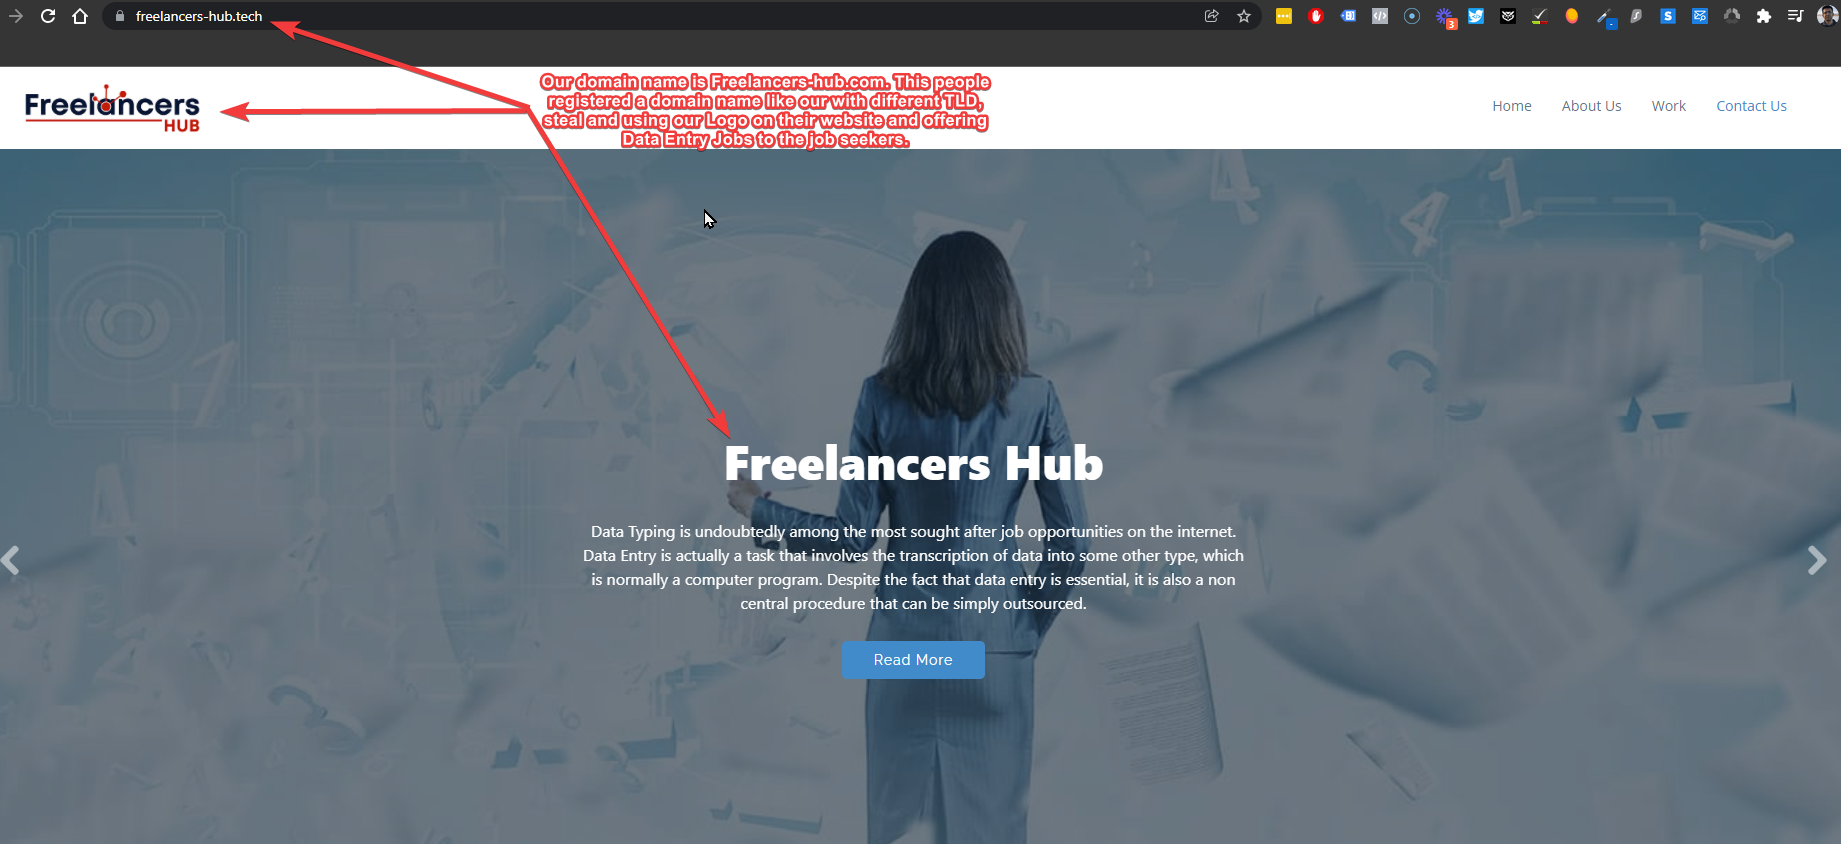 Fake website - Freelancers-hub.tech